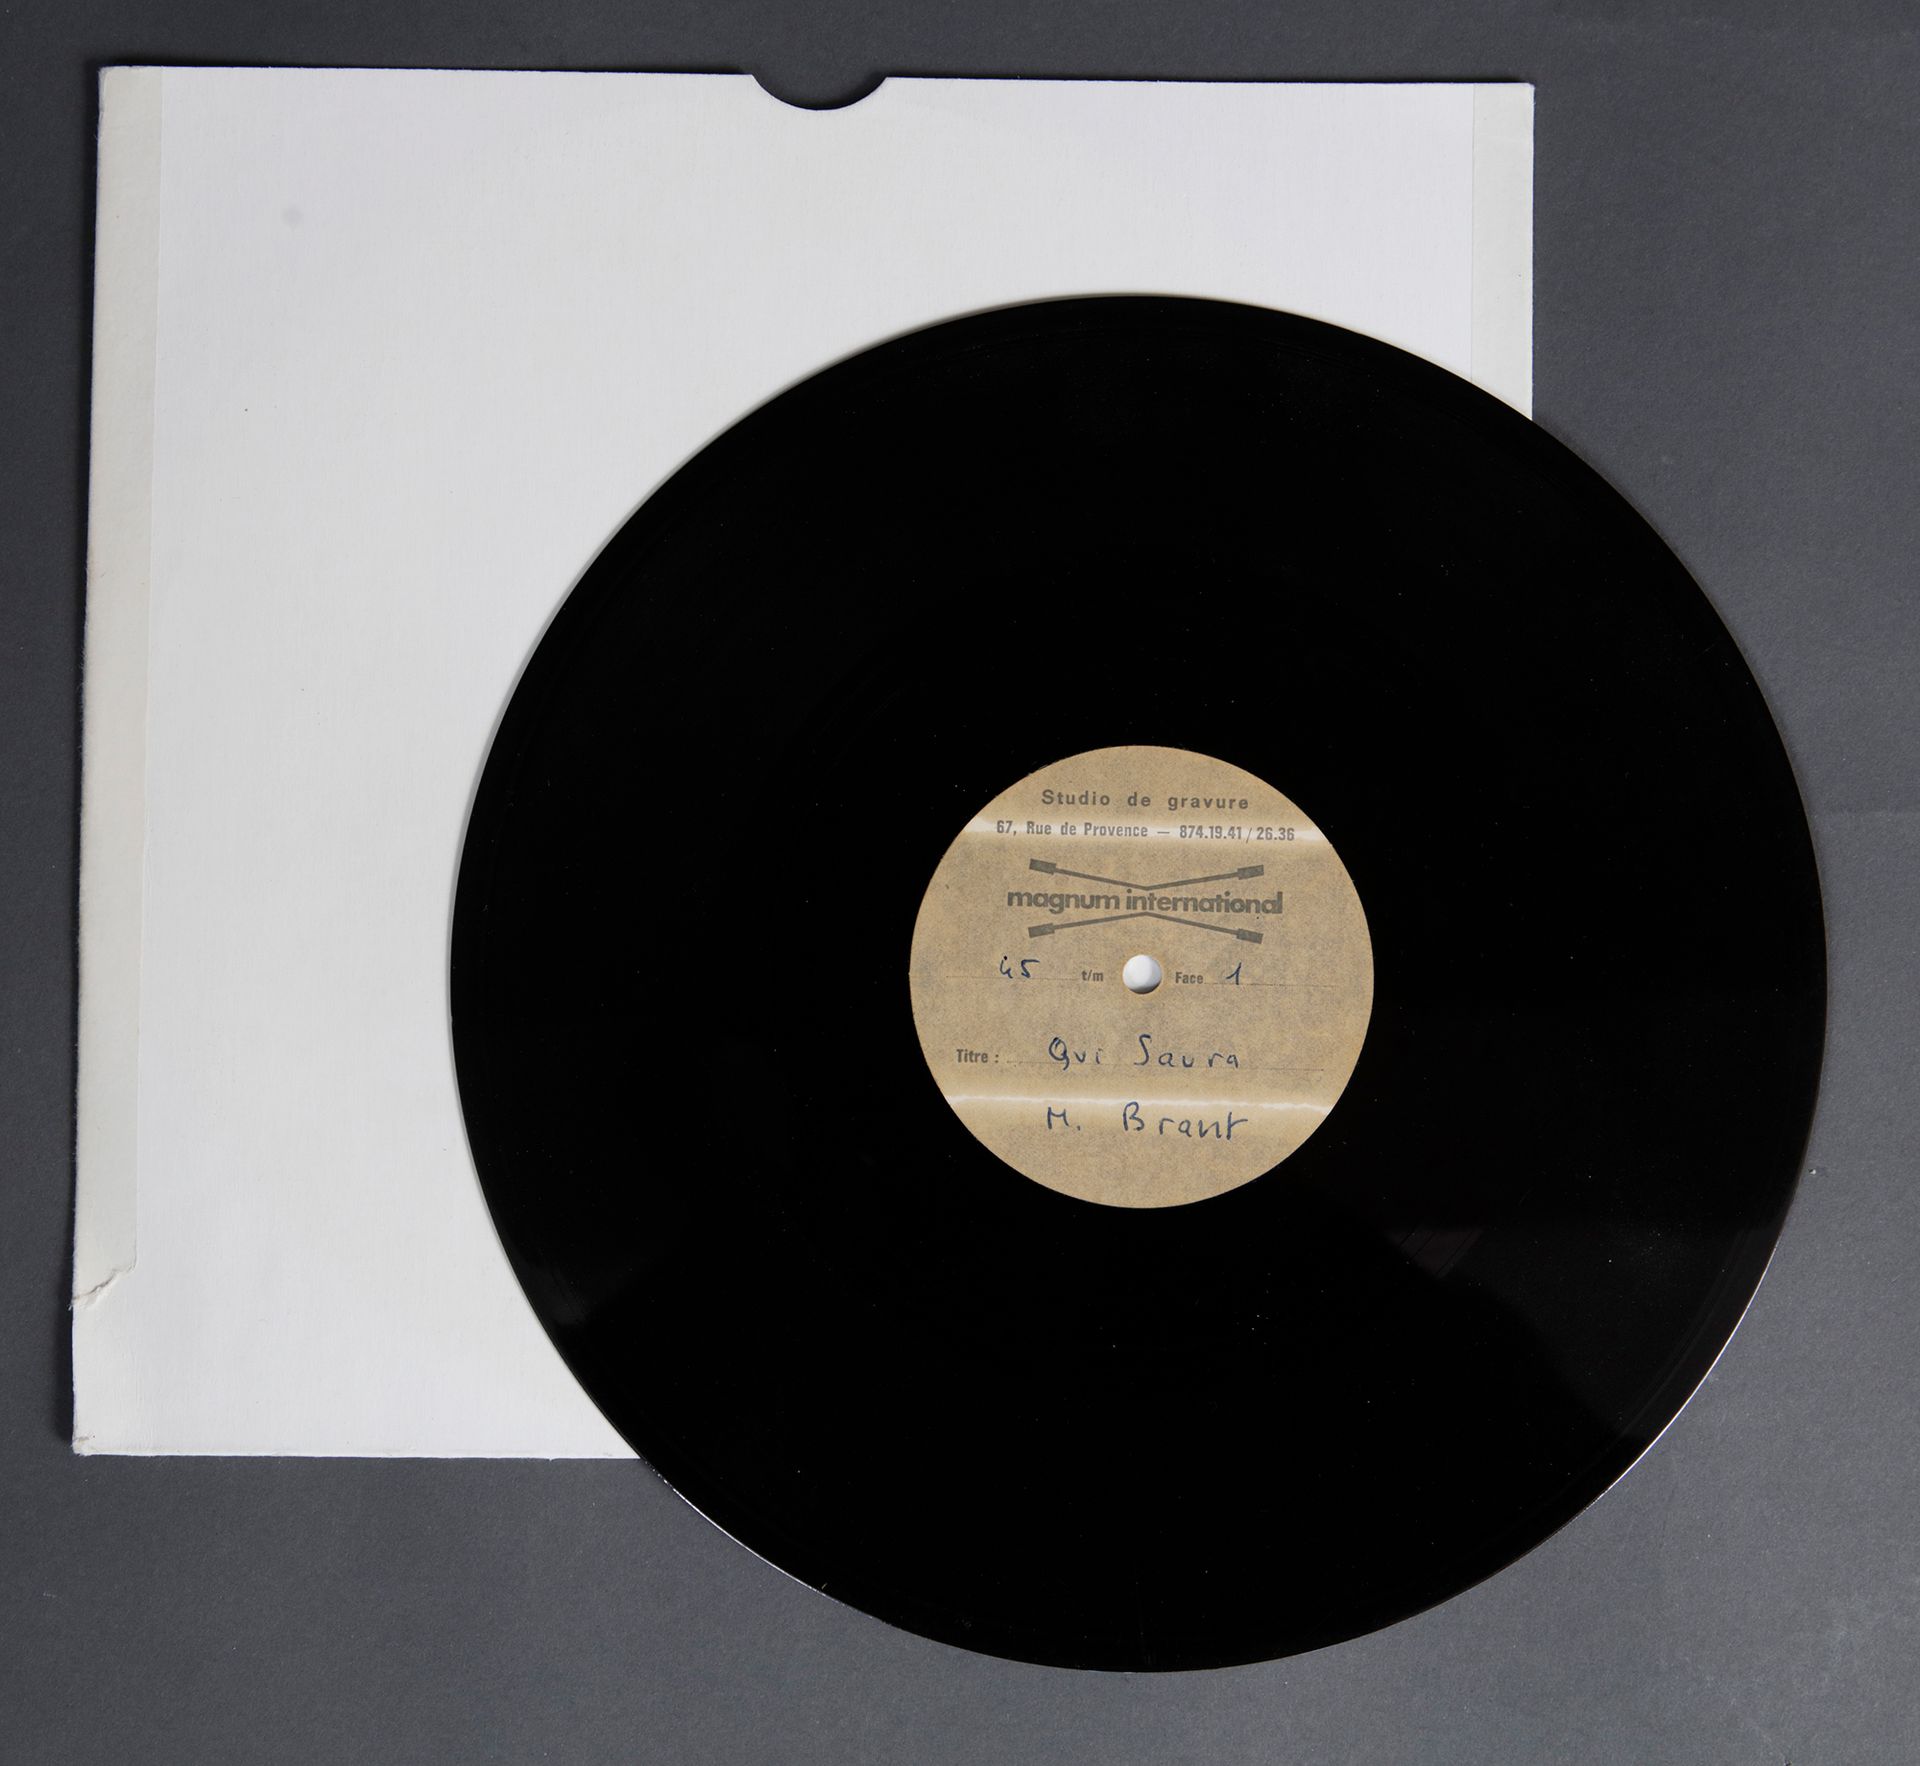 Null 米克-布兰特
1张醋酸纤维盘，来自 "Qui saura "歌曲的第一次录音，在第一次广播和商业发行光盘之前。这张25厘米
格式，以便制作人和艺术家可&hellip;